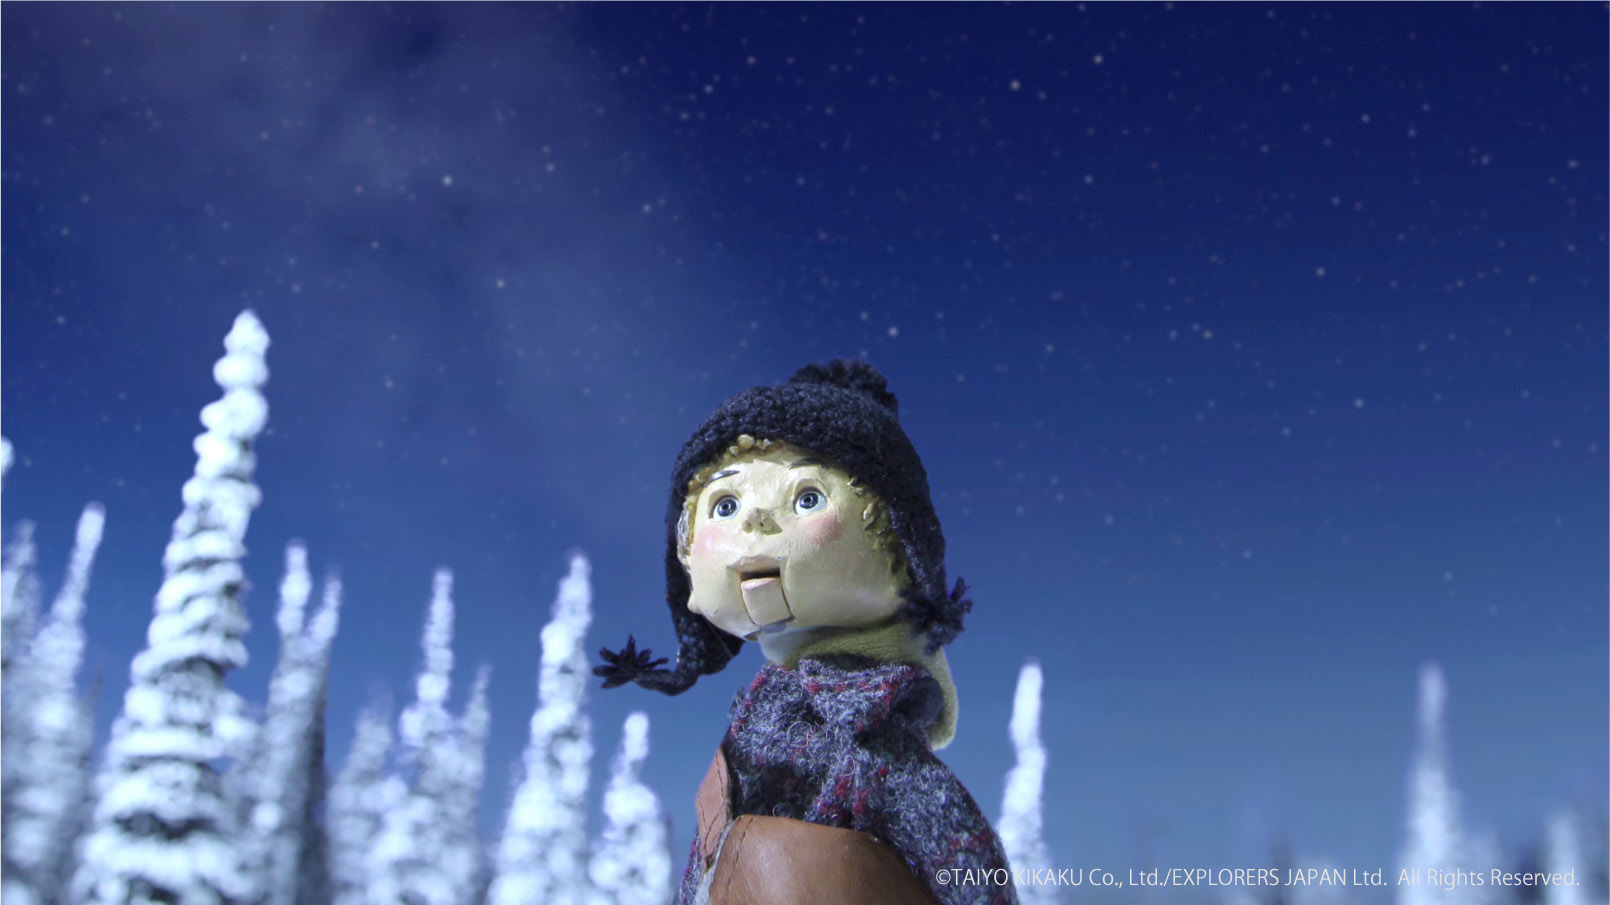 Takeshi Yashiro Stop Motion Animation: NORMAN THE SNOWMAN-The Northern ...